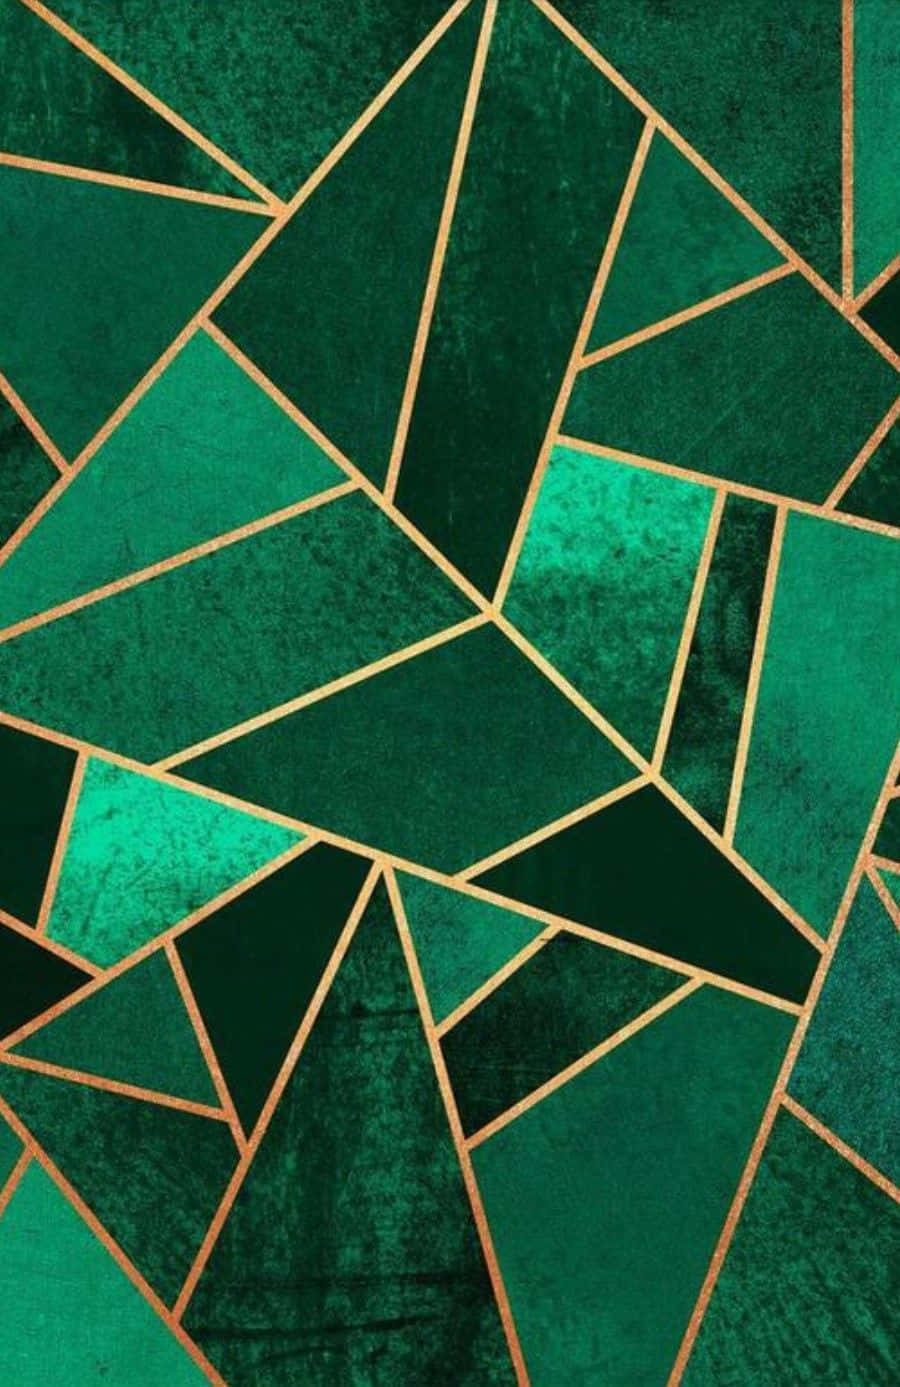 Emerald Tiles Art Deco Iphone Wallpaper